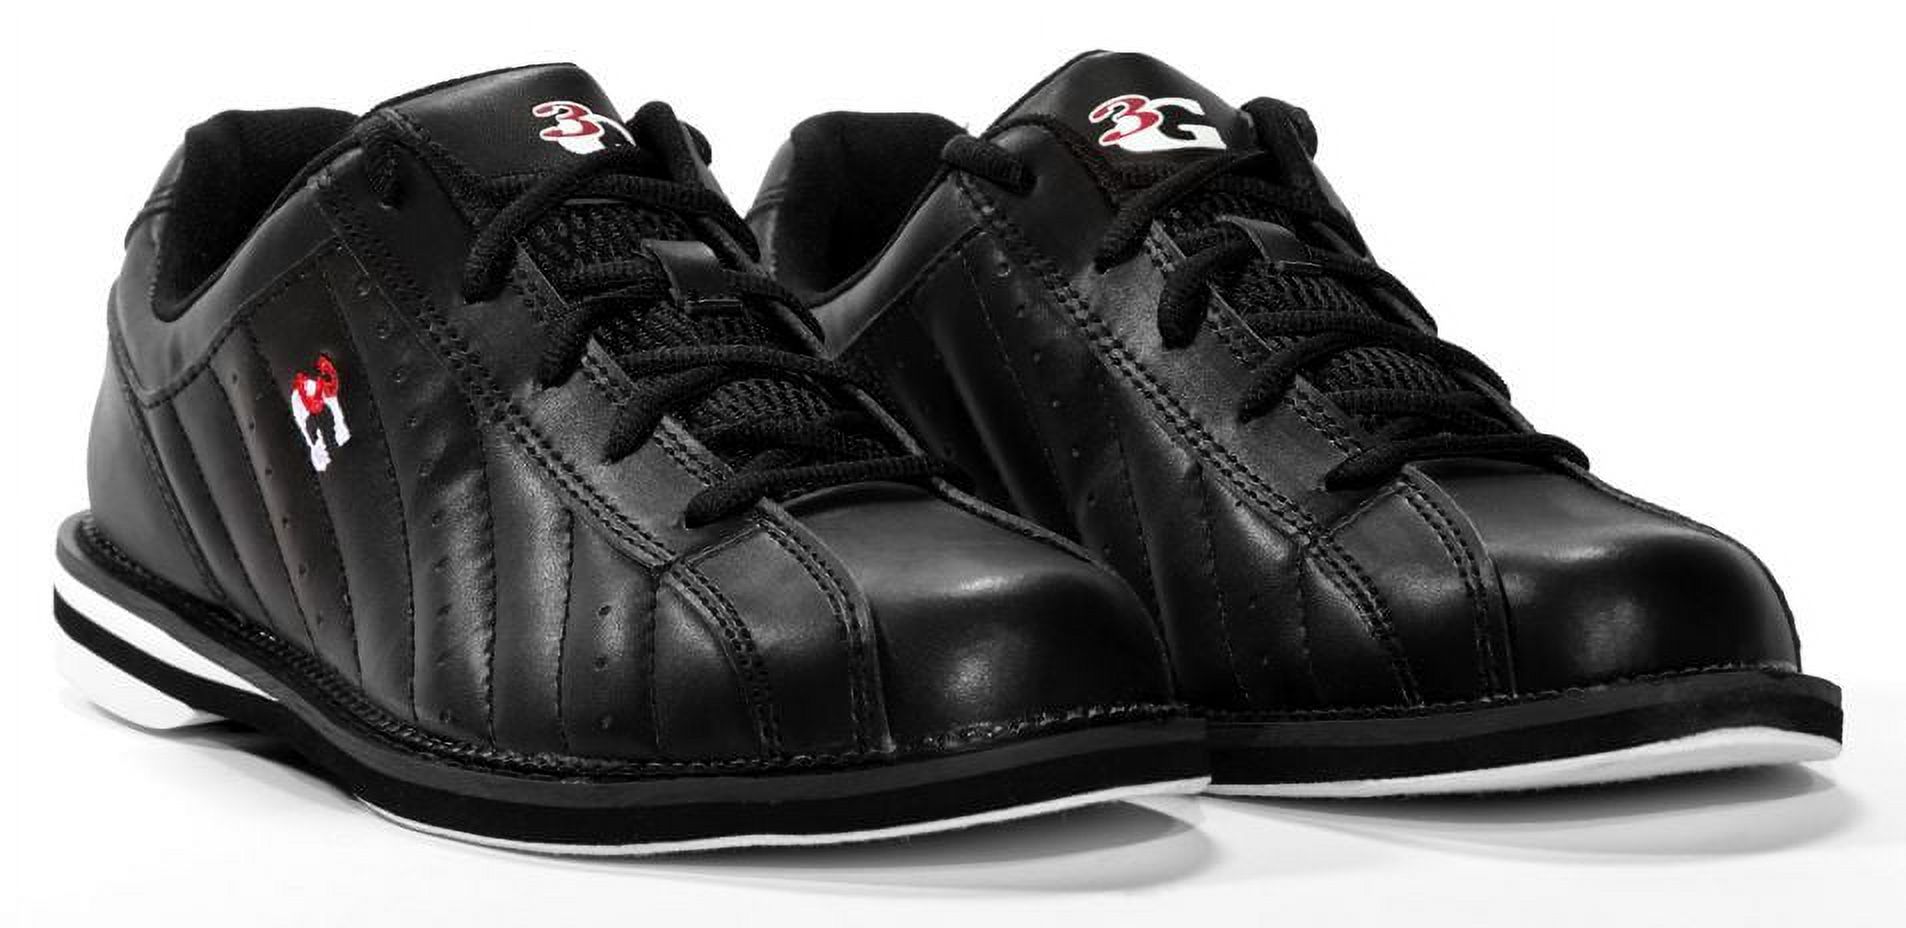 3G Men's Kicks Bowling Shoes, Black - image 1 of 2